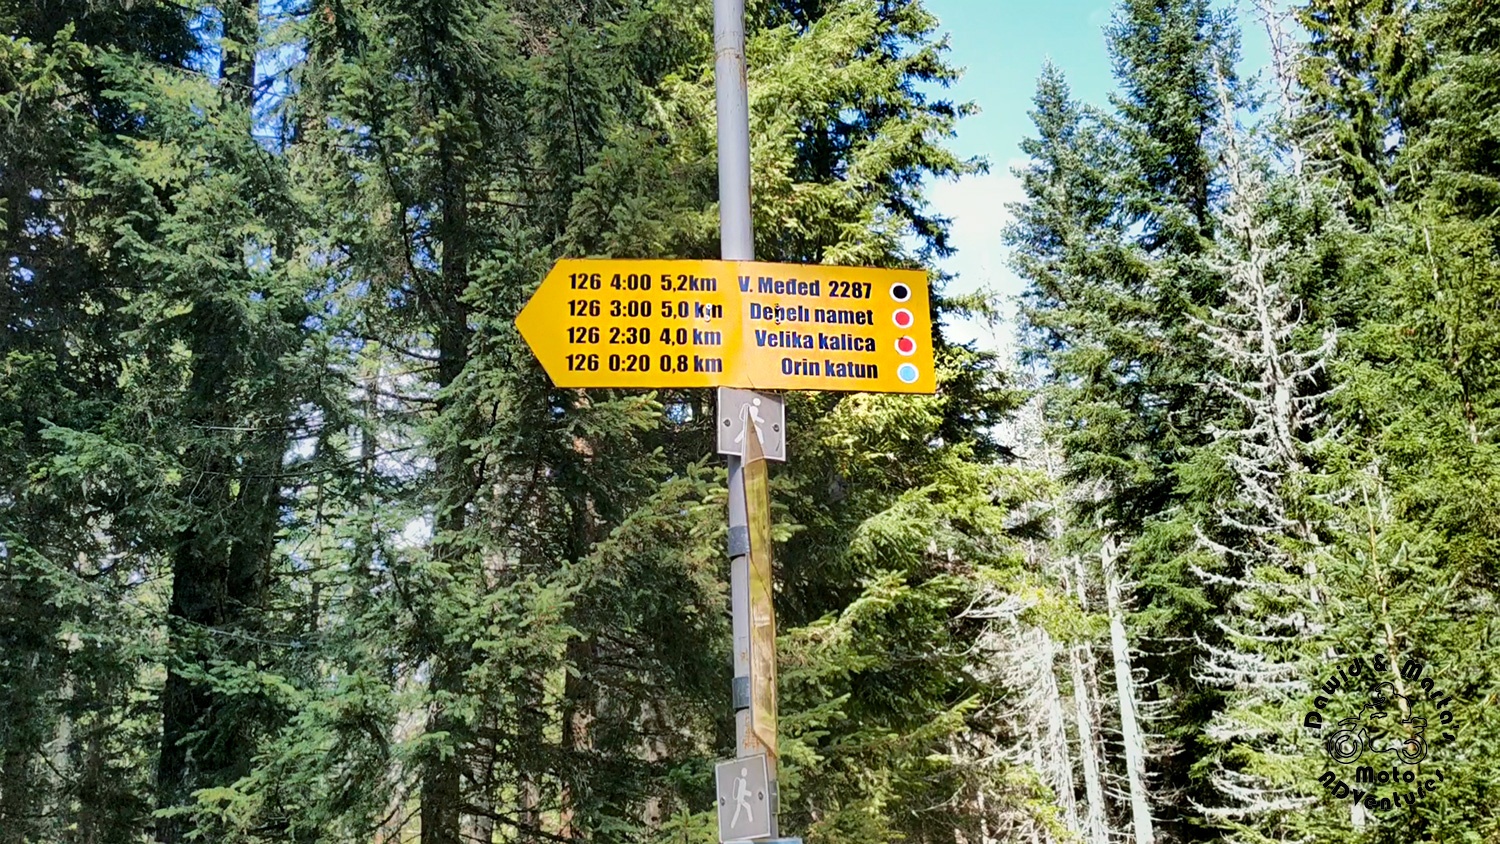 Sign pointing to Veliki Meded